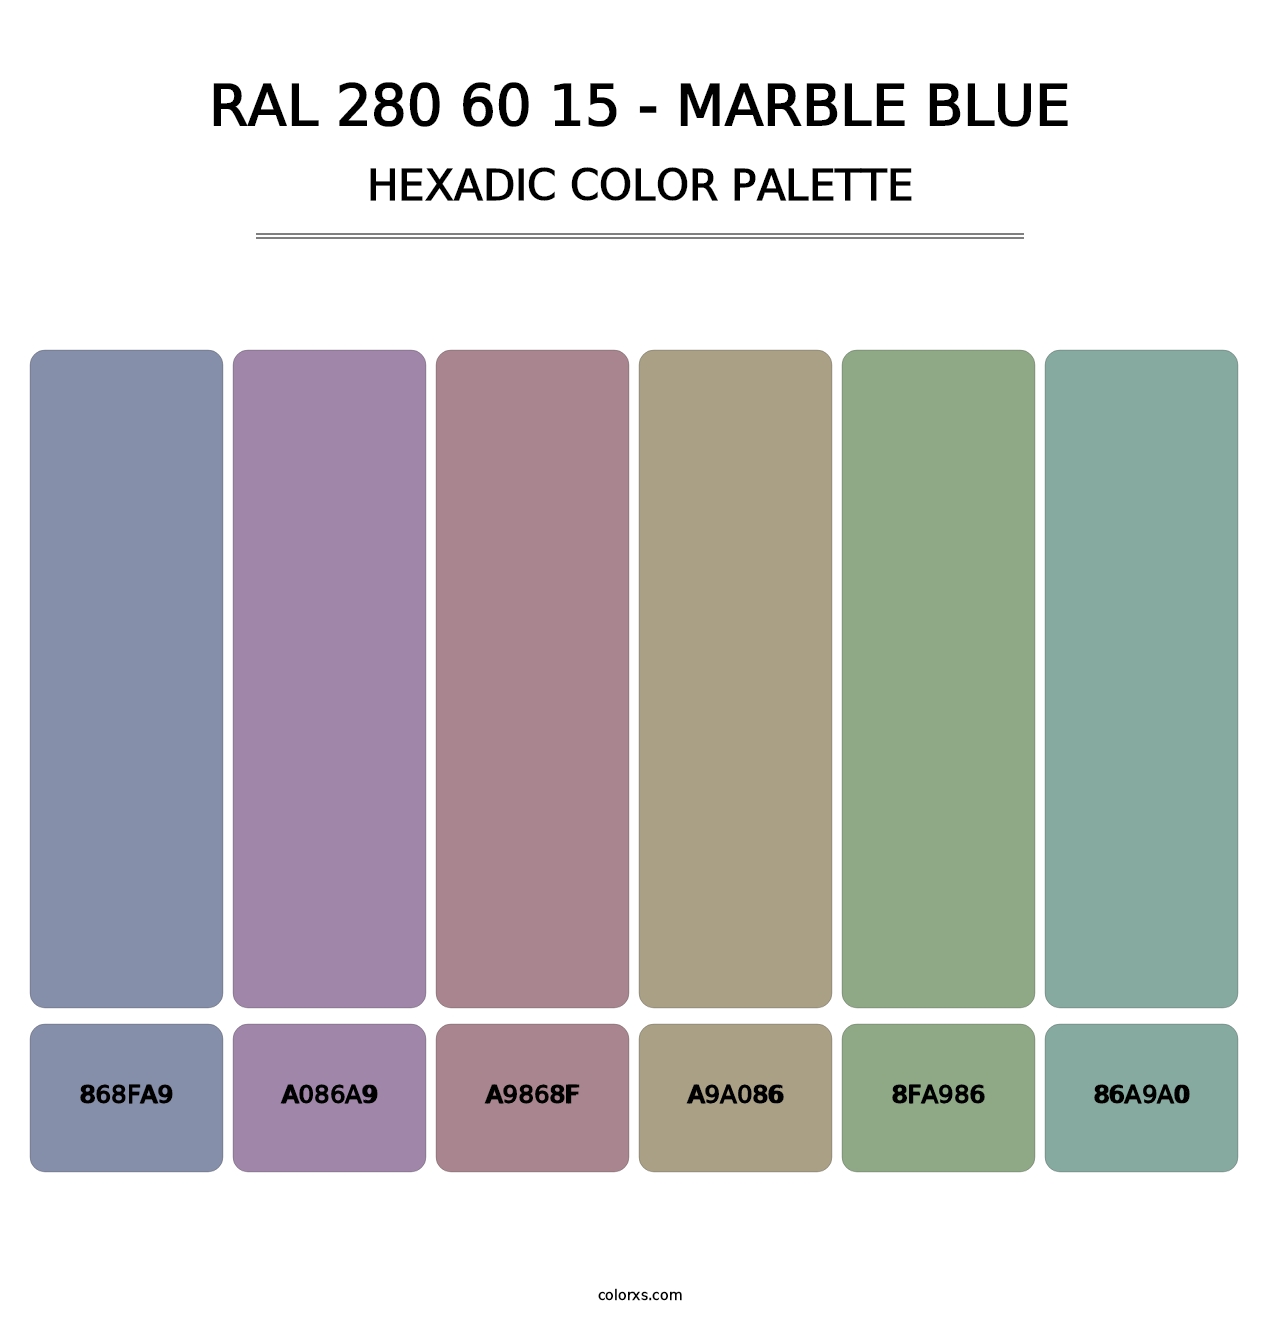 RAL 280 60 15 - Marble Blue - Hexadic Color Palette